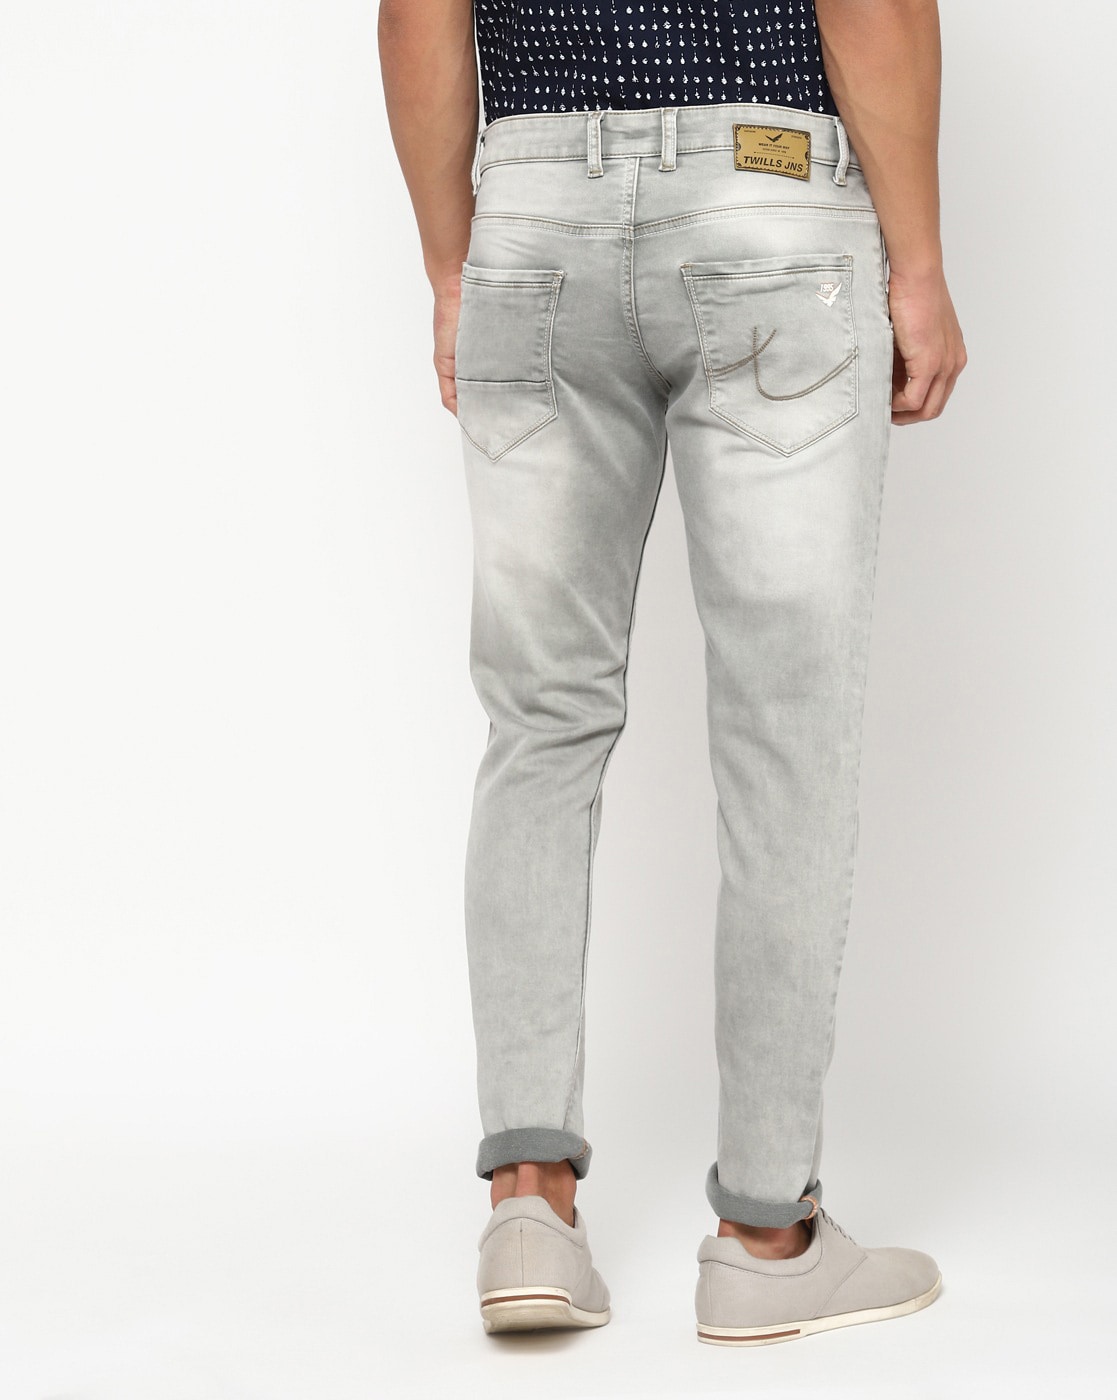 Buy IDEALSANXUN Men's Elastic Waist Jeans/Twill Casual Pants, Dark Blue,  32W x 32L at Amazon.in